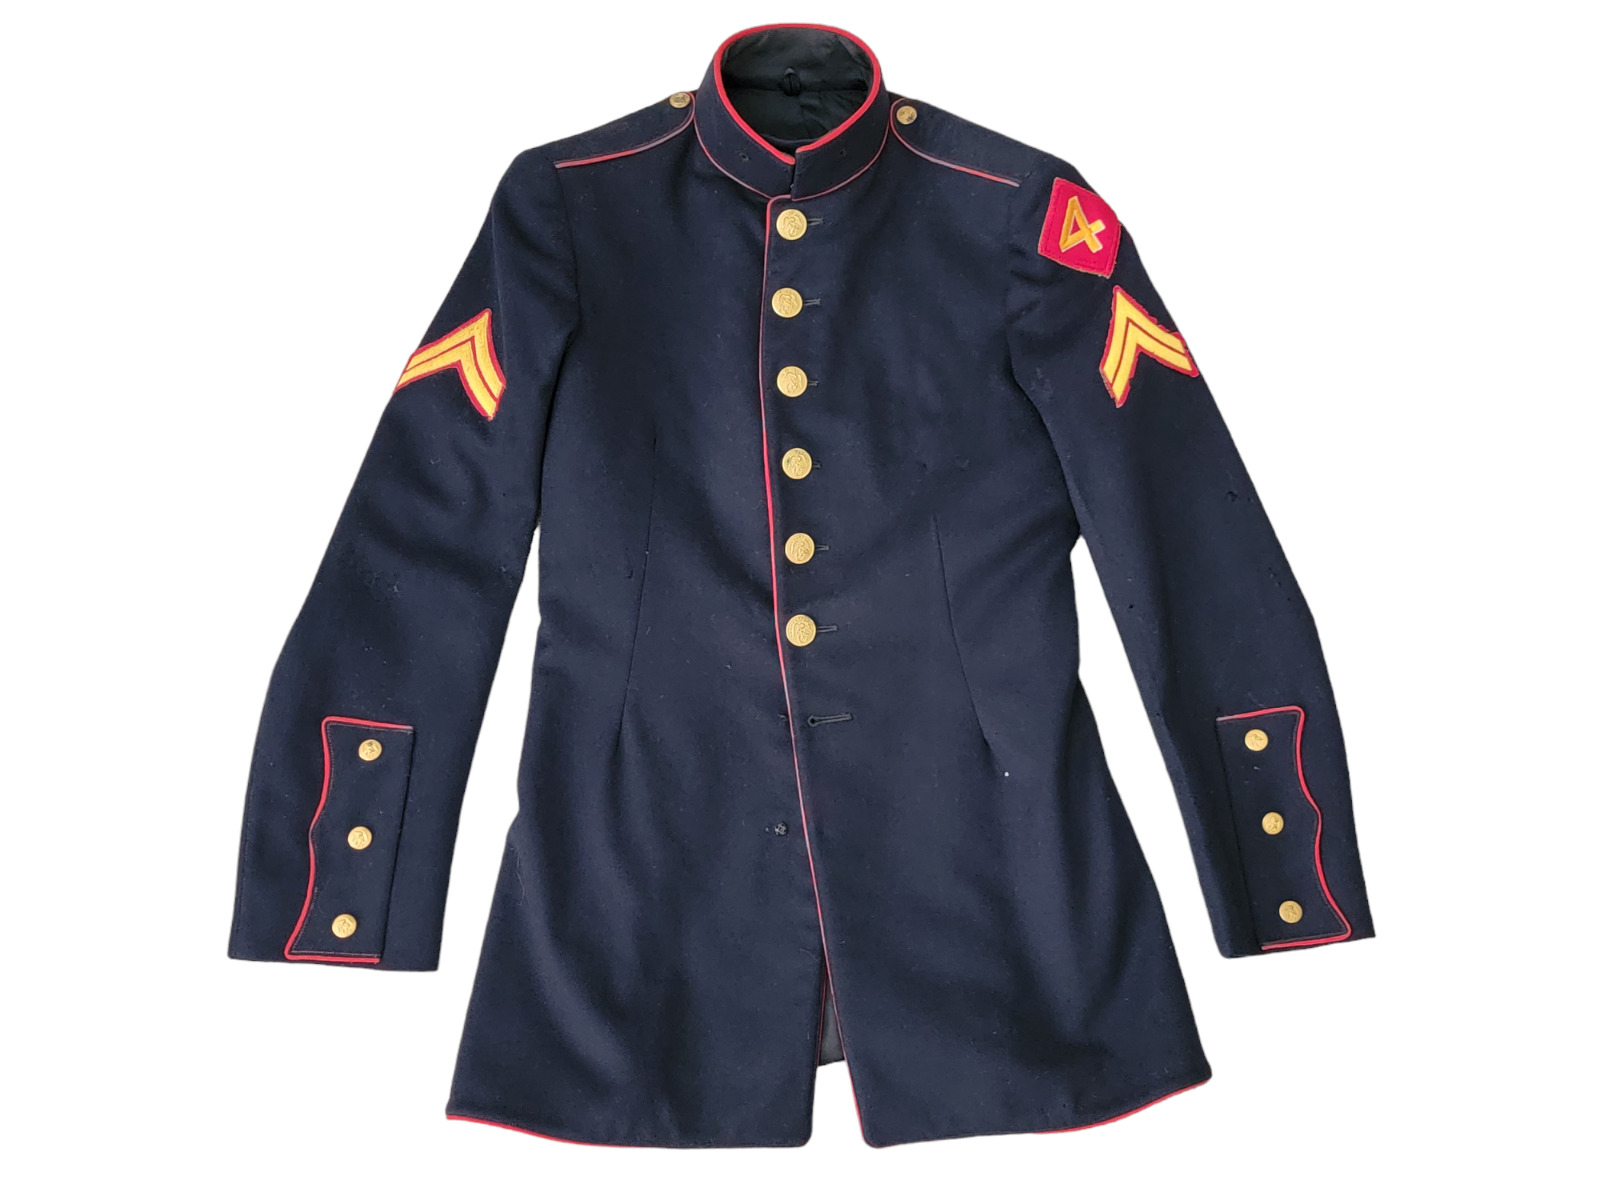 Vintage WWII US Marine 4th Division Dress Blues Uniform Tunic Wool Jacket Coat